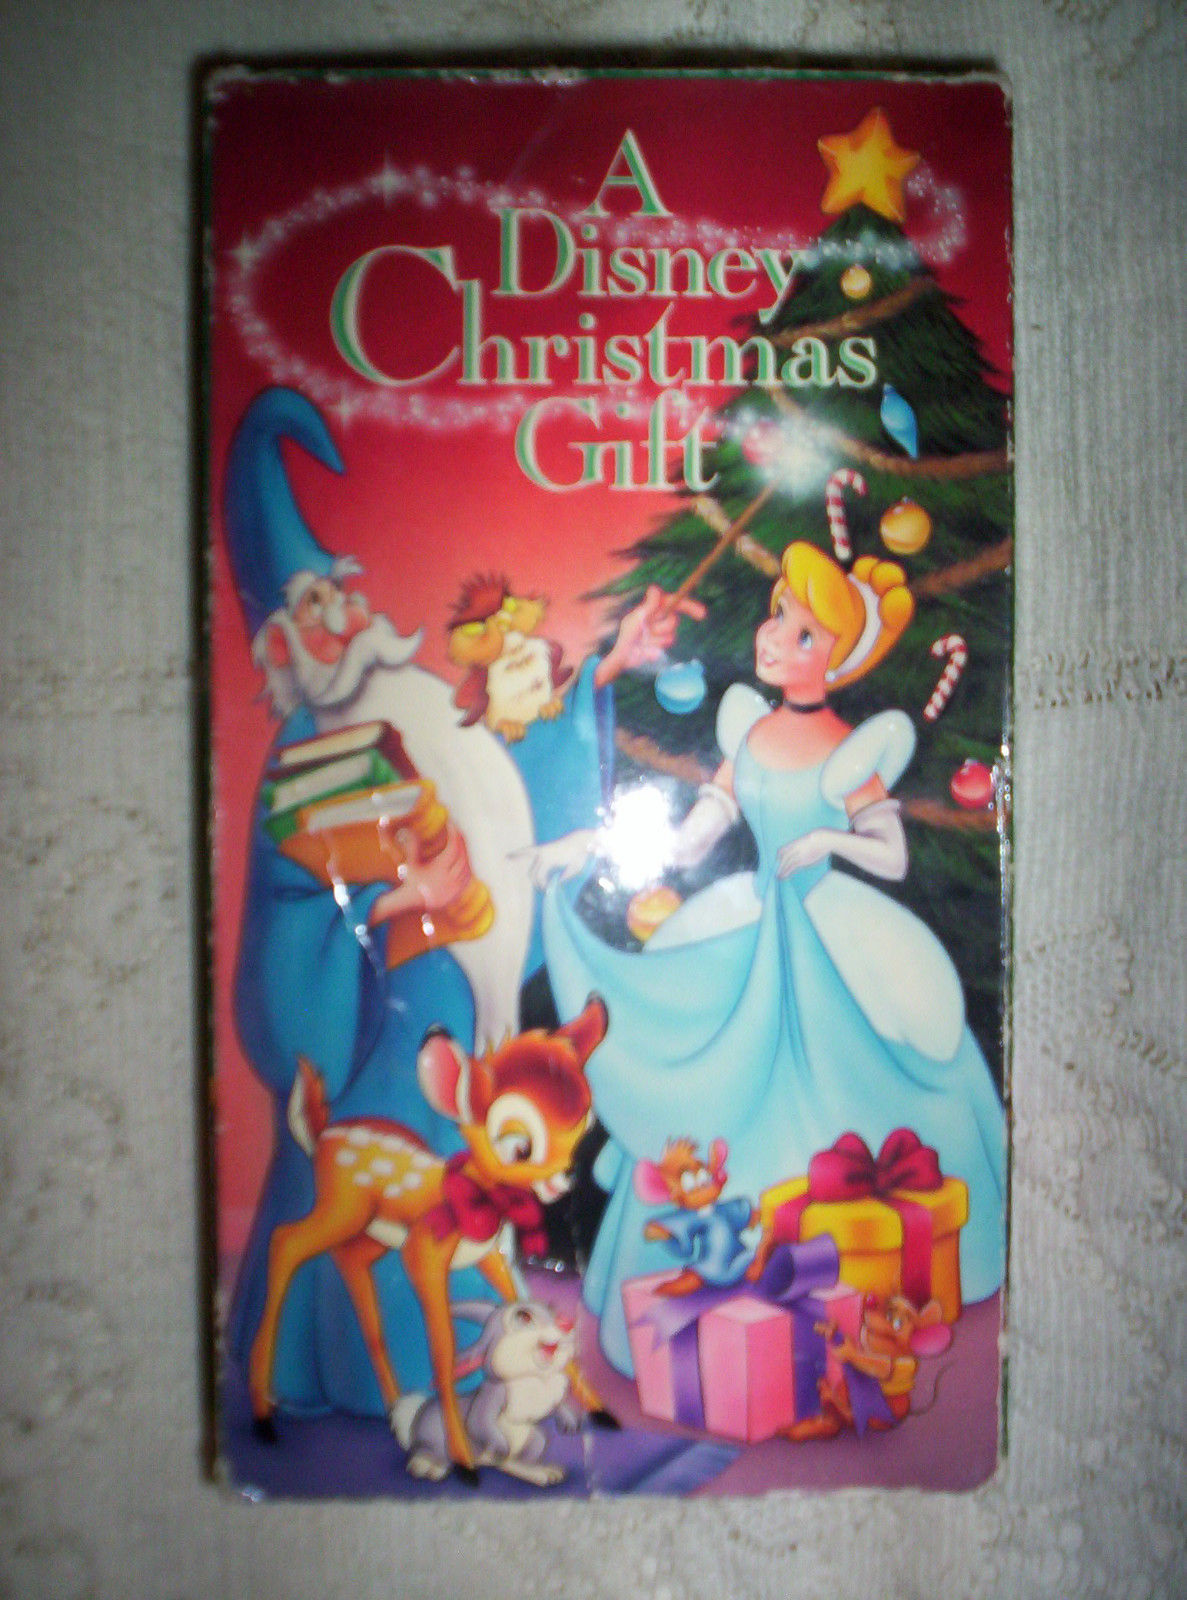 Image A Disney Christmas Gift VHS Cover.JPG DisneyWiki